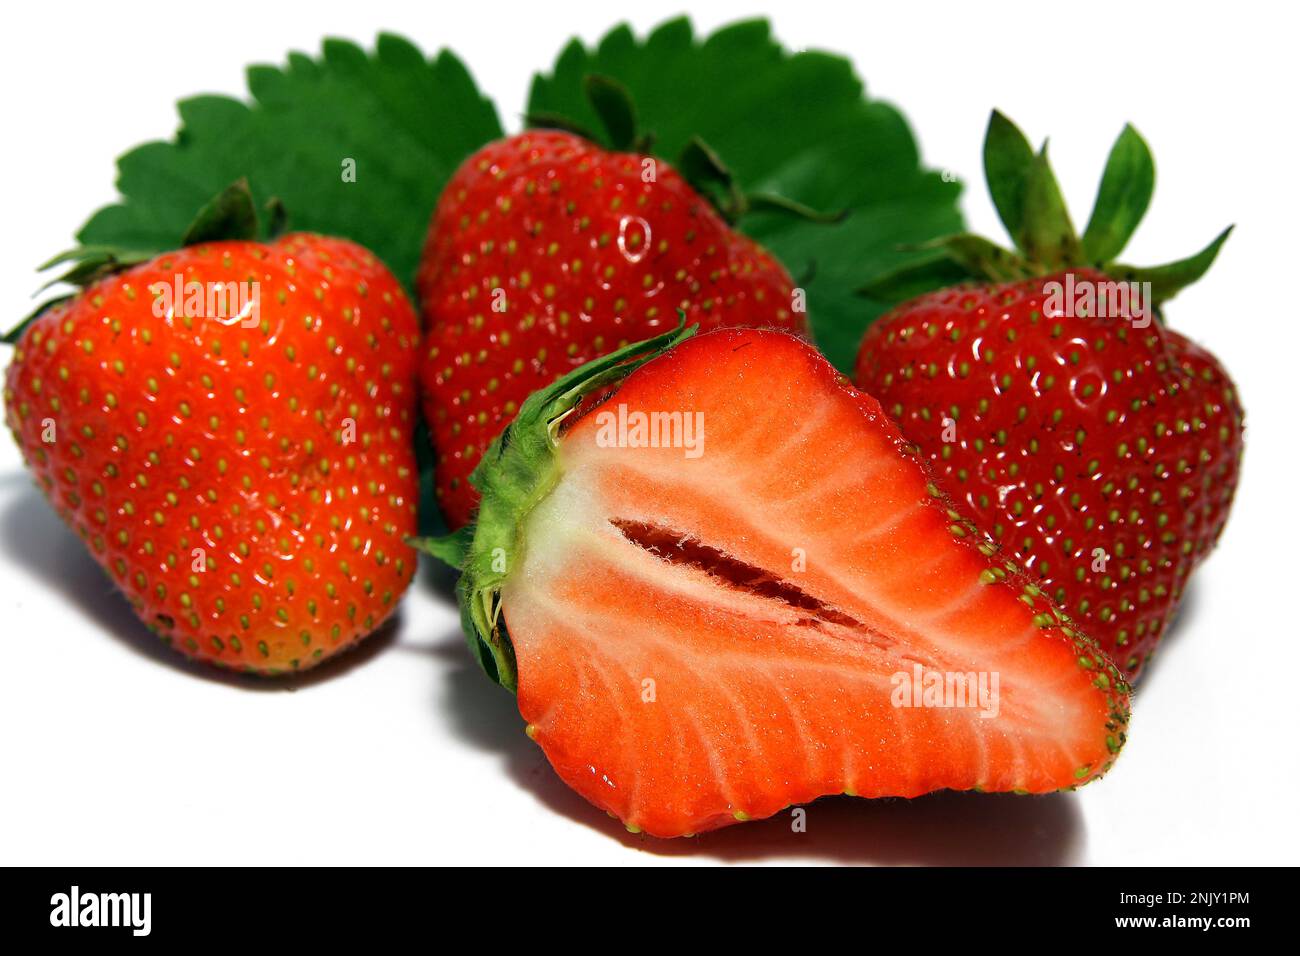 hybrid strawberry, garden strawberry (Fragaria x ananassa, Fragaria ananassa), fresh strawberries, halved, cutout Stock Photo